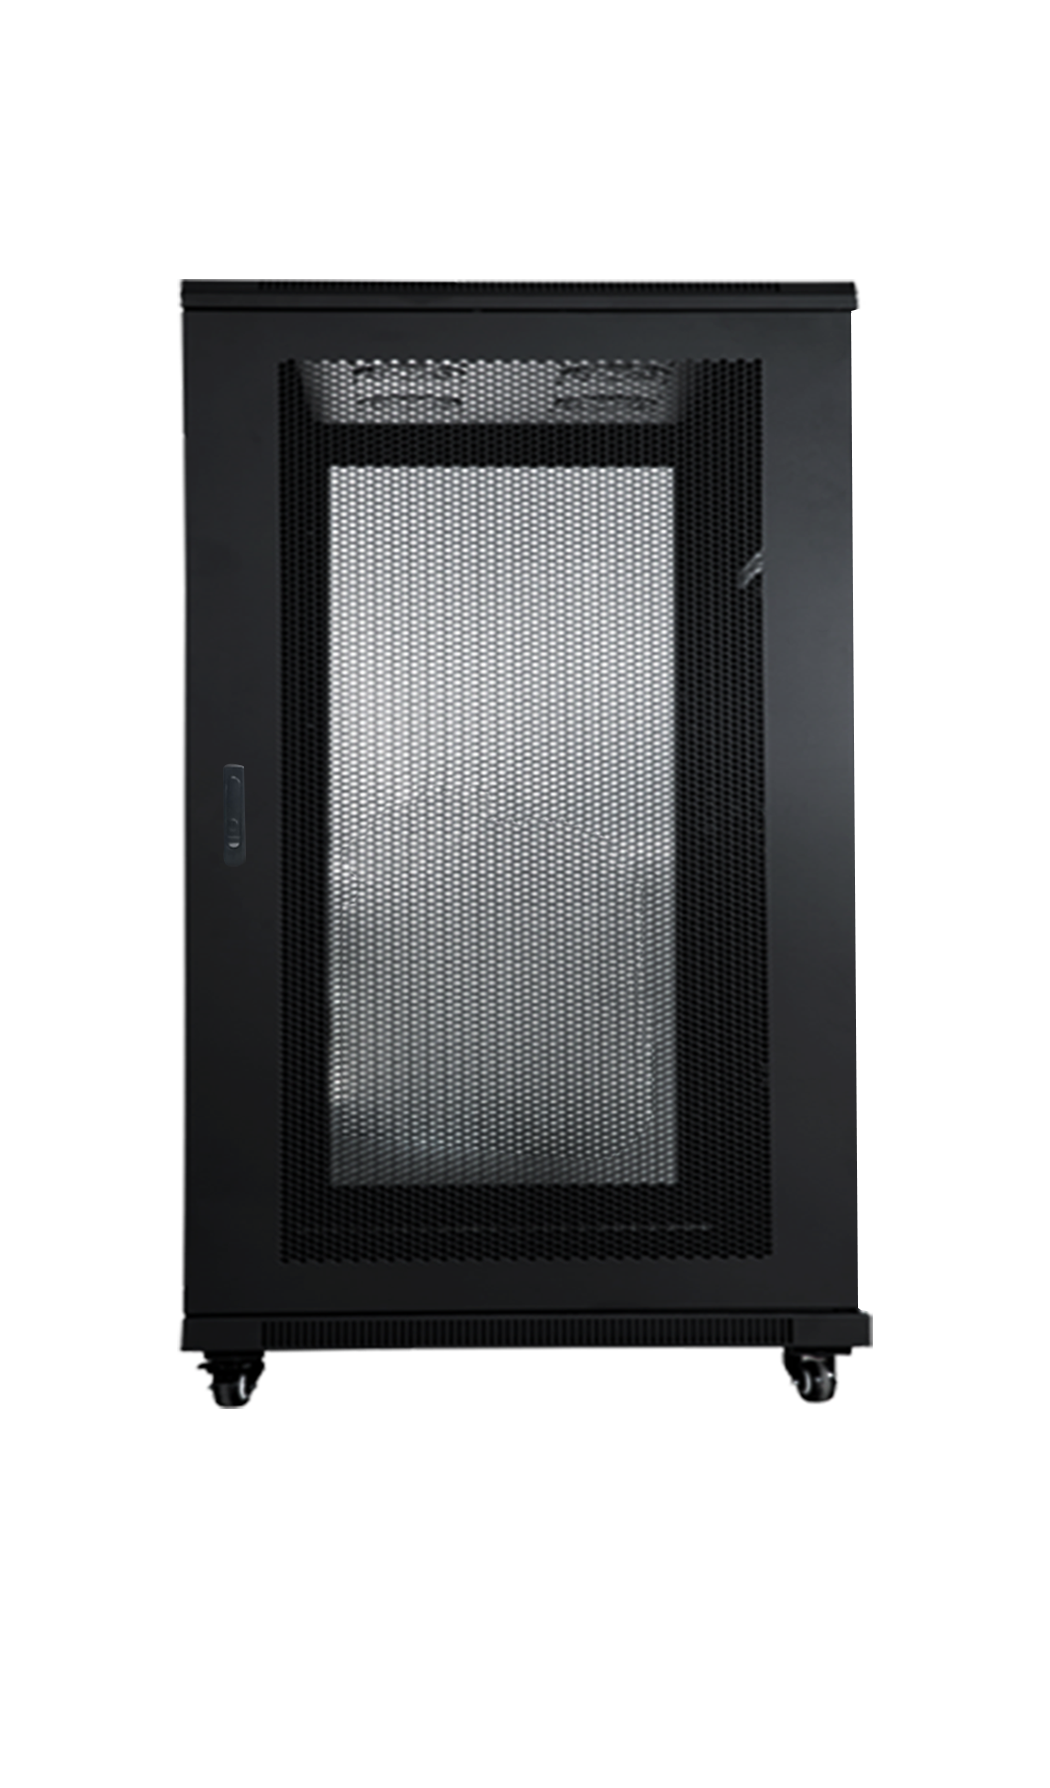 22U 600mm x 800mm Server Cabinet